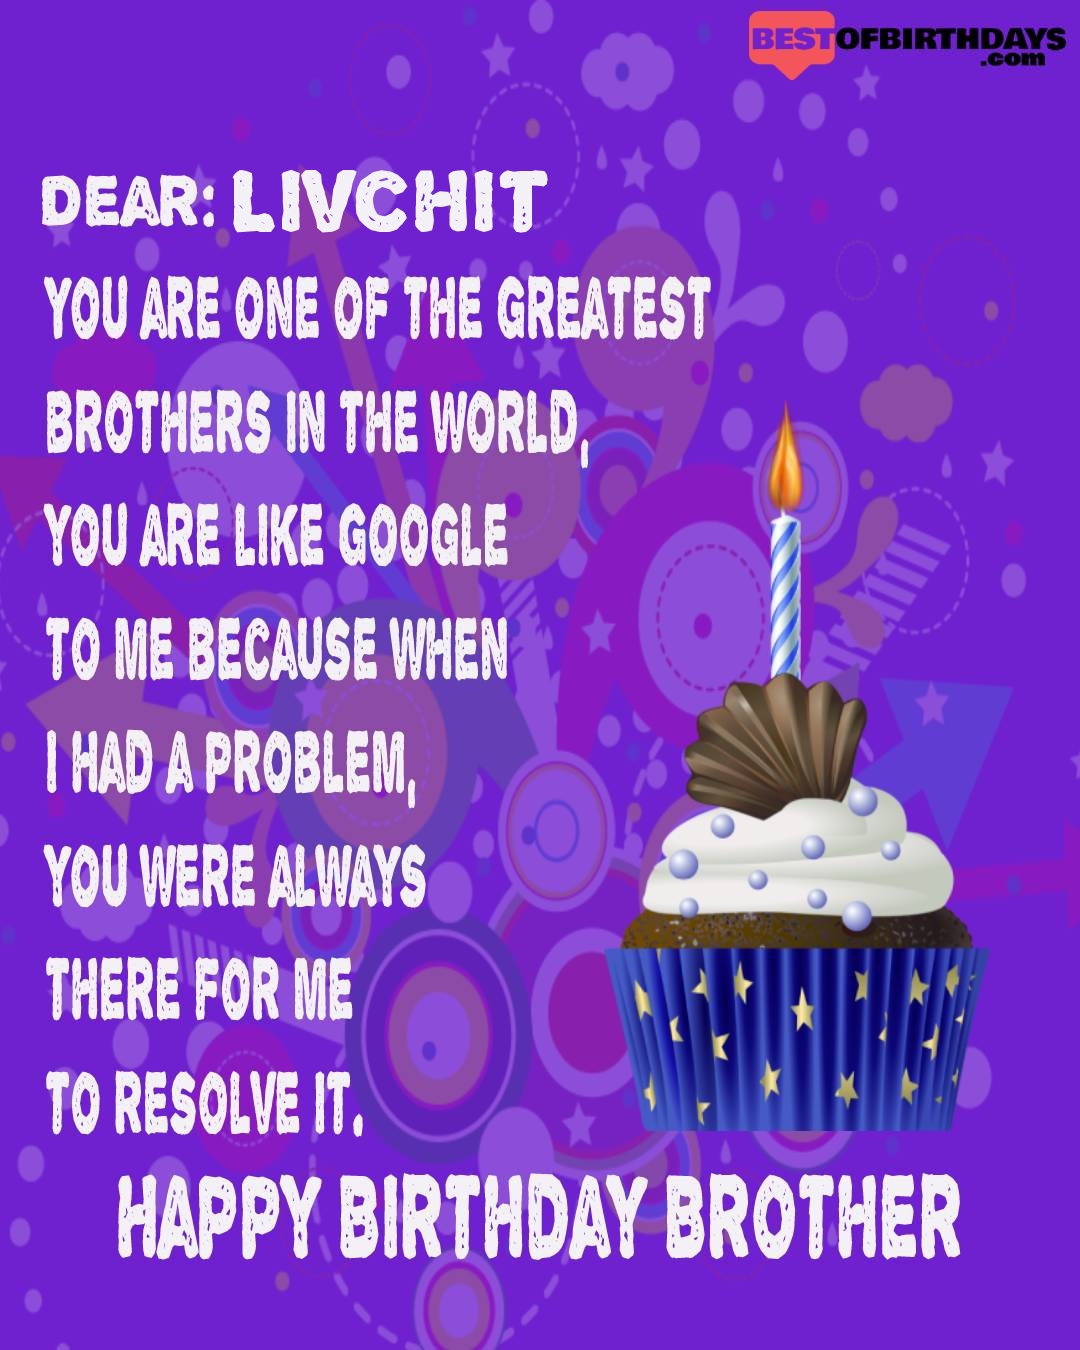 Happy birthday livchit bhai brother bro